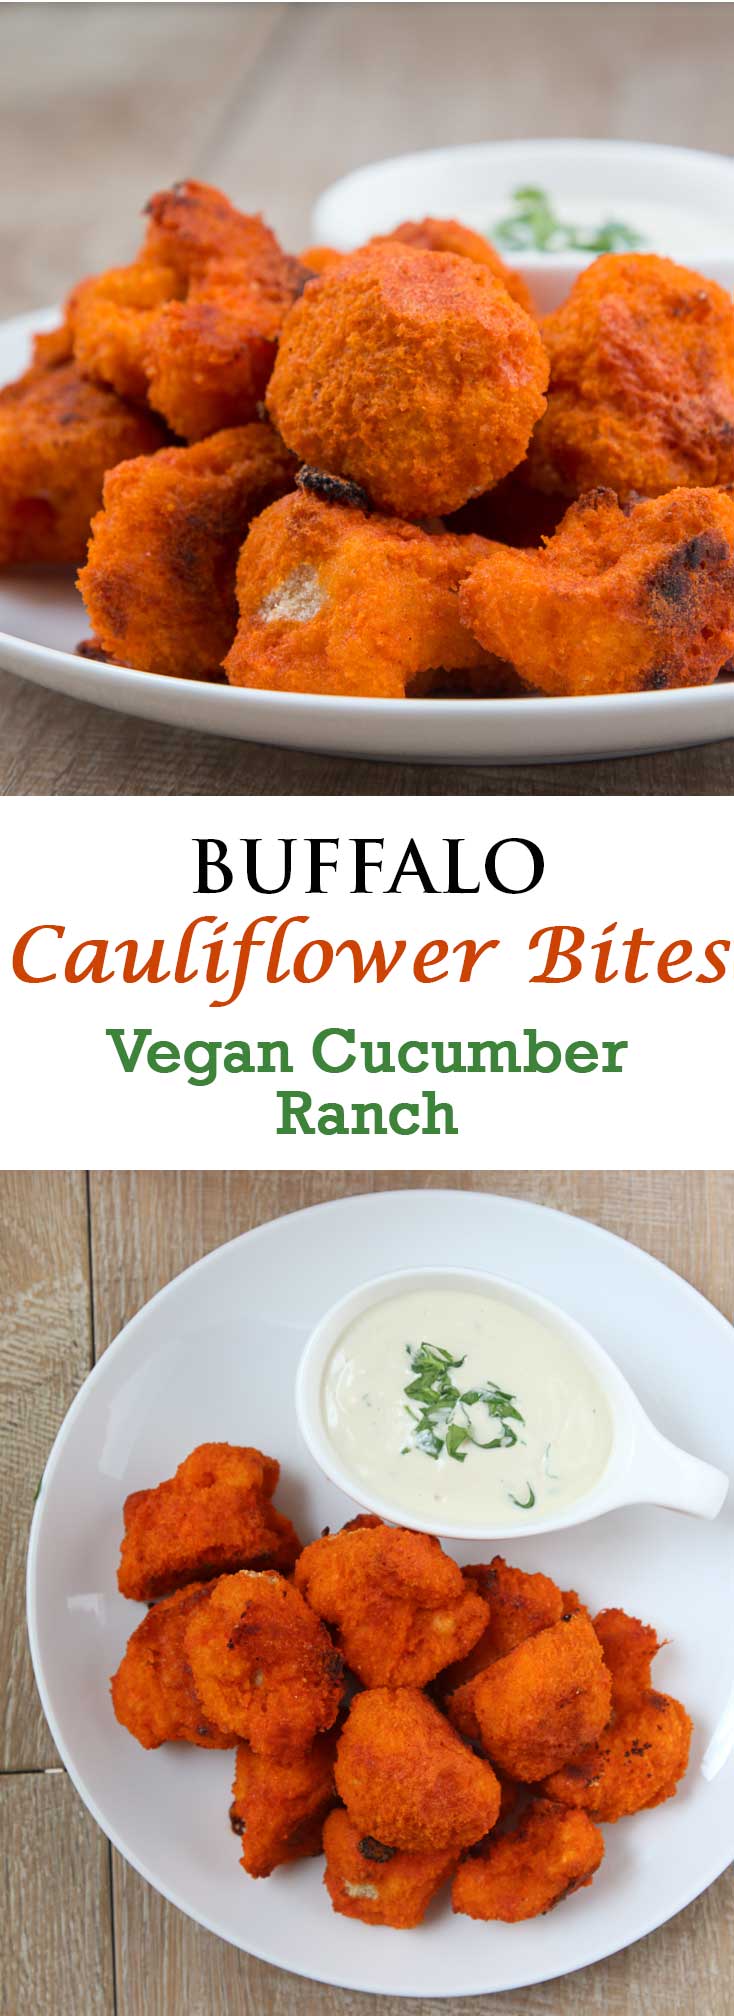 Buffalo Cauliflower Bites with Vegan Cucumber Ranch #vegan #review | www.vegetariangastronomy.com